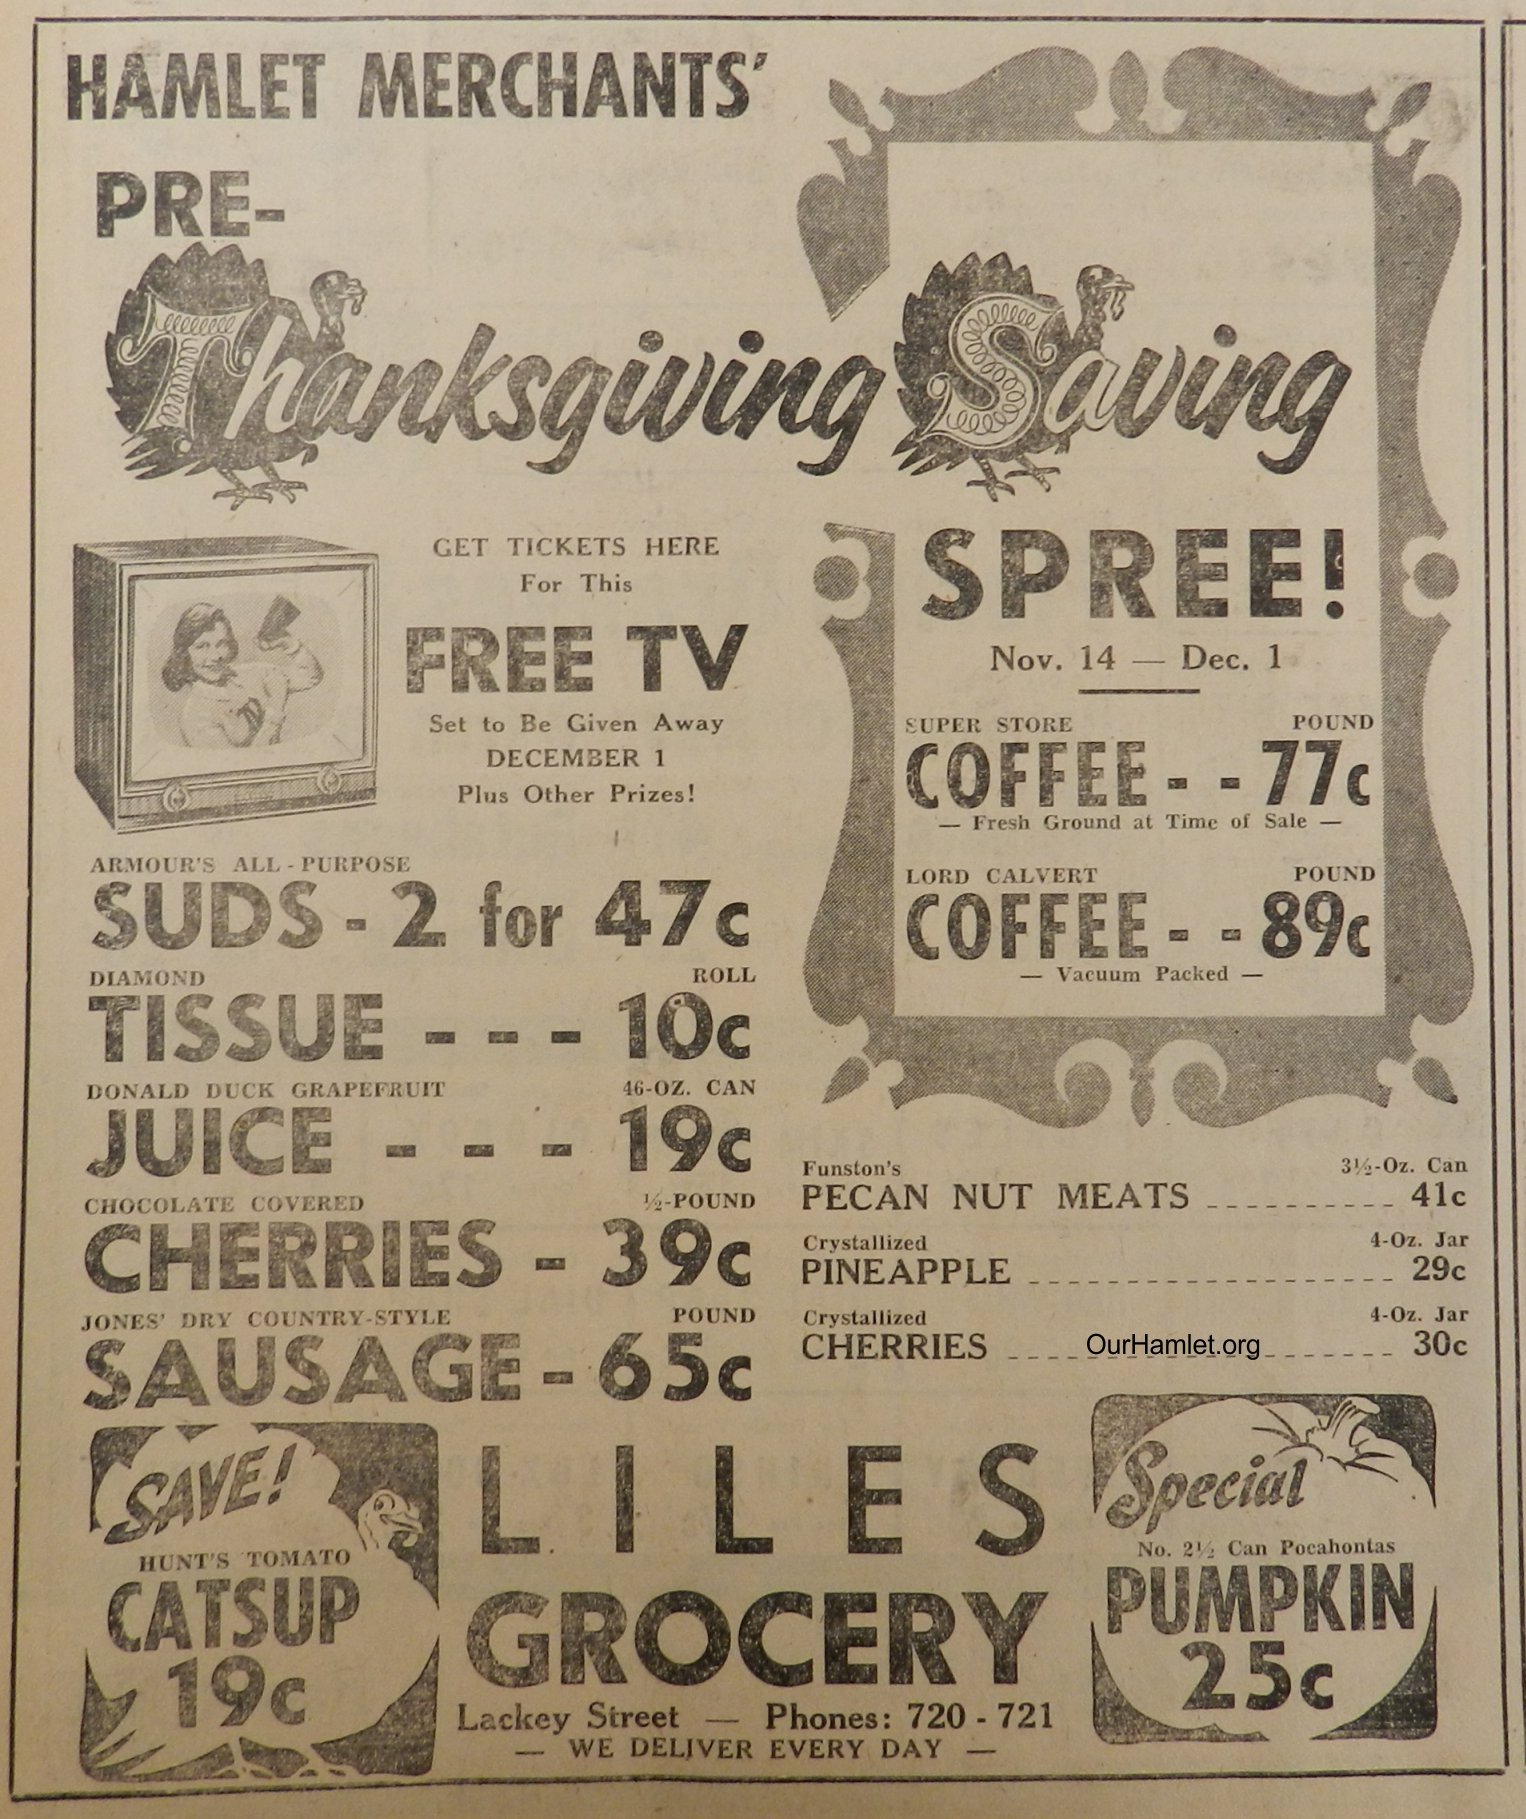 1952 Liles Grocery OH.jpg